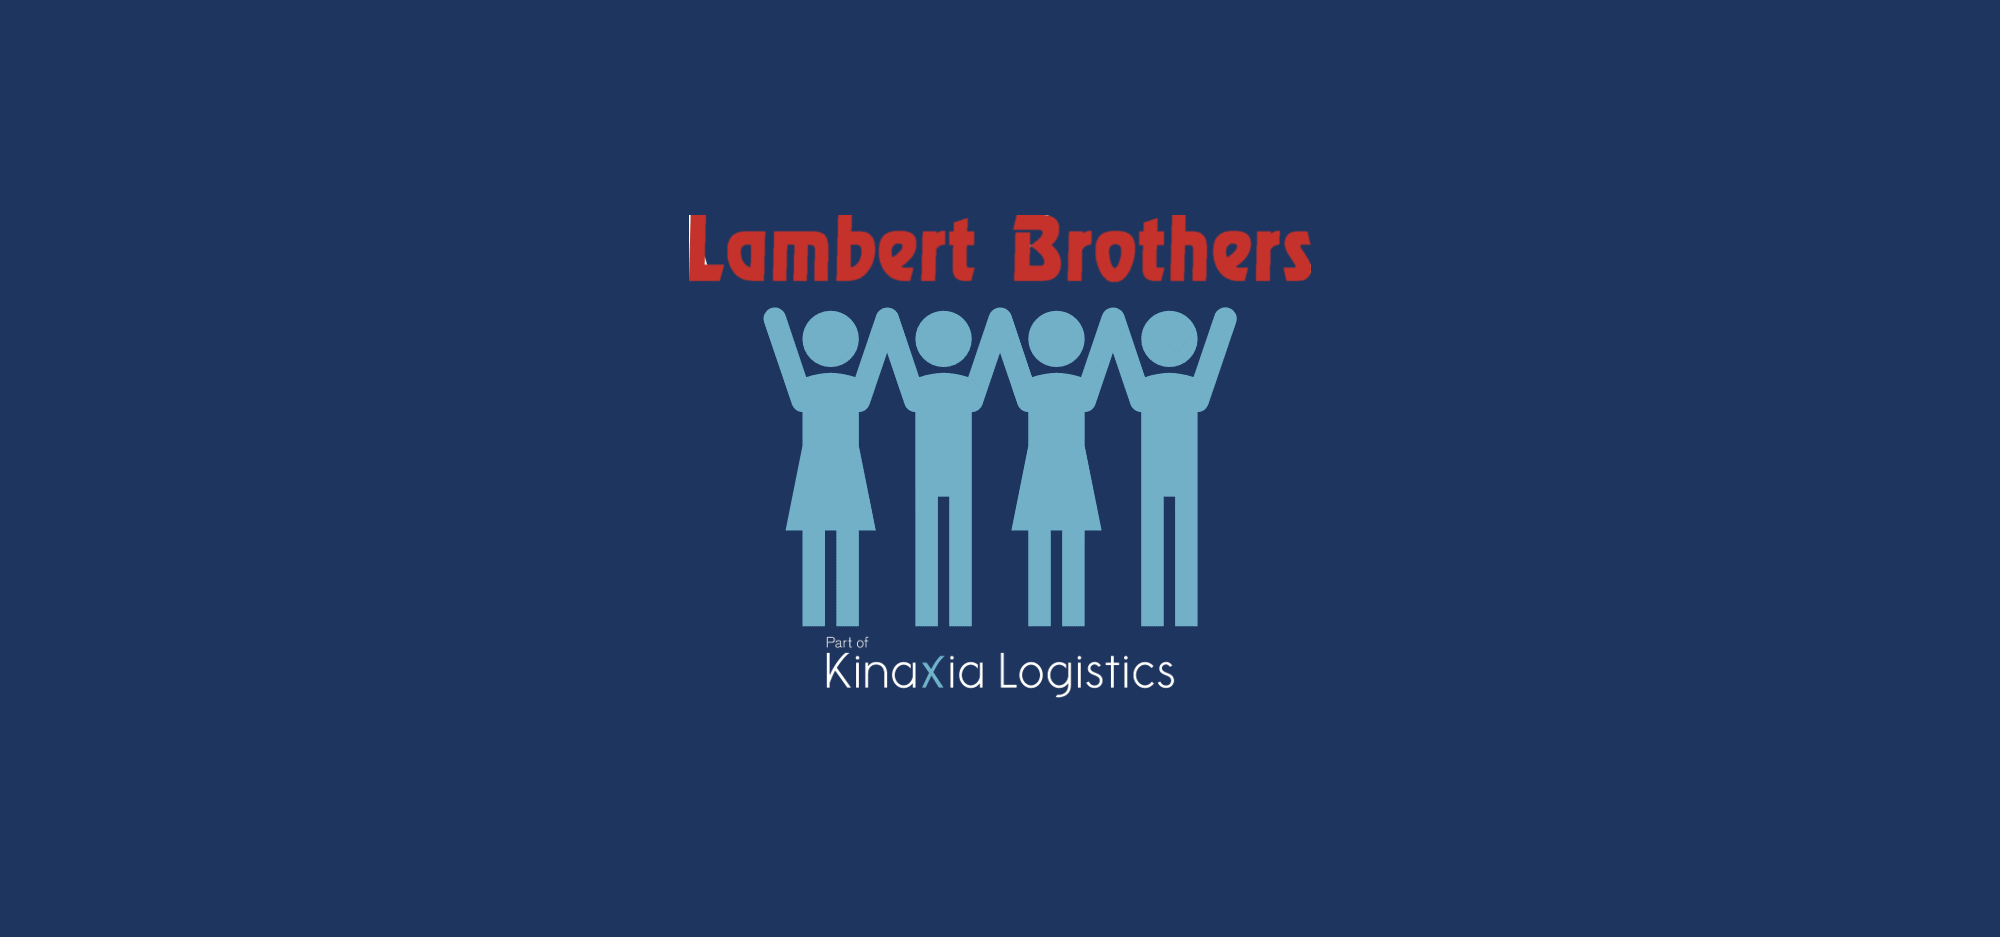 Lambert Brothers Support Solent Jobs Programme